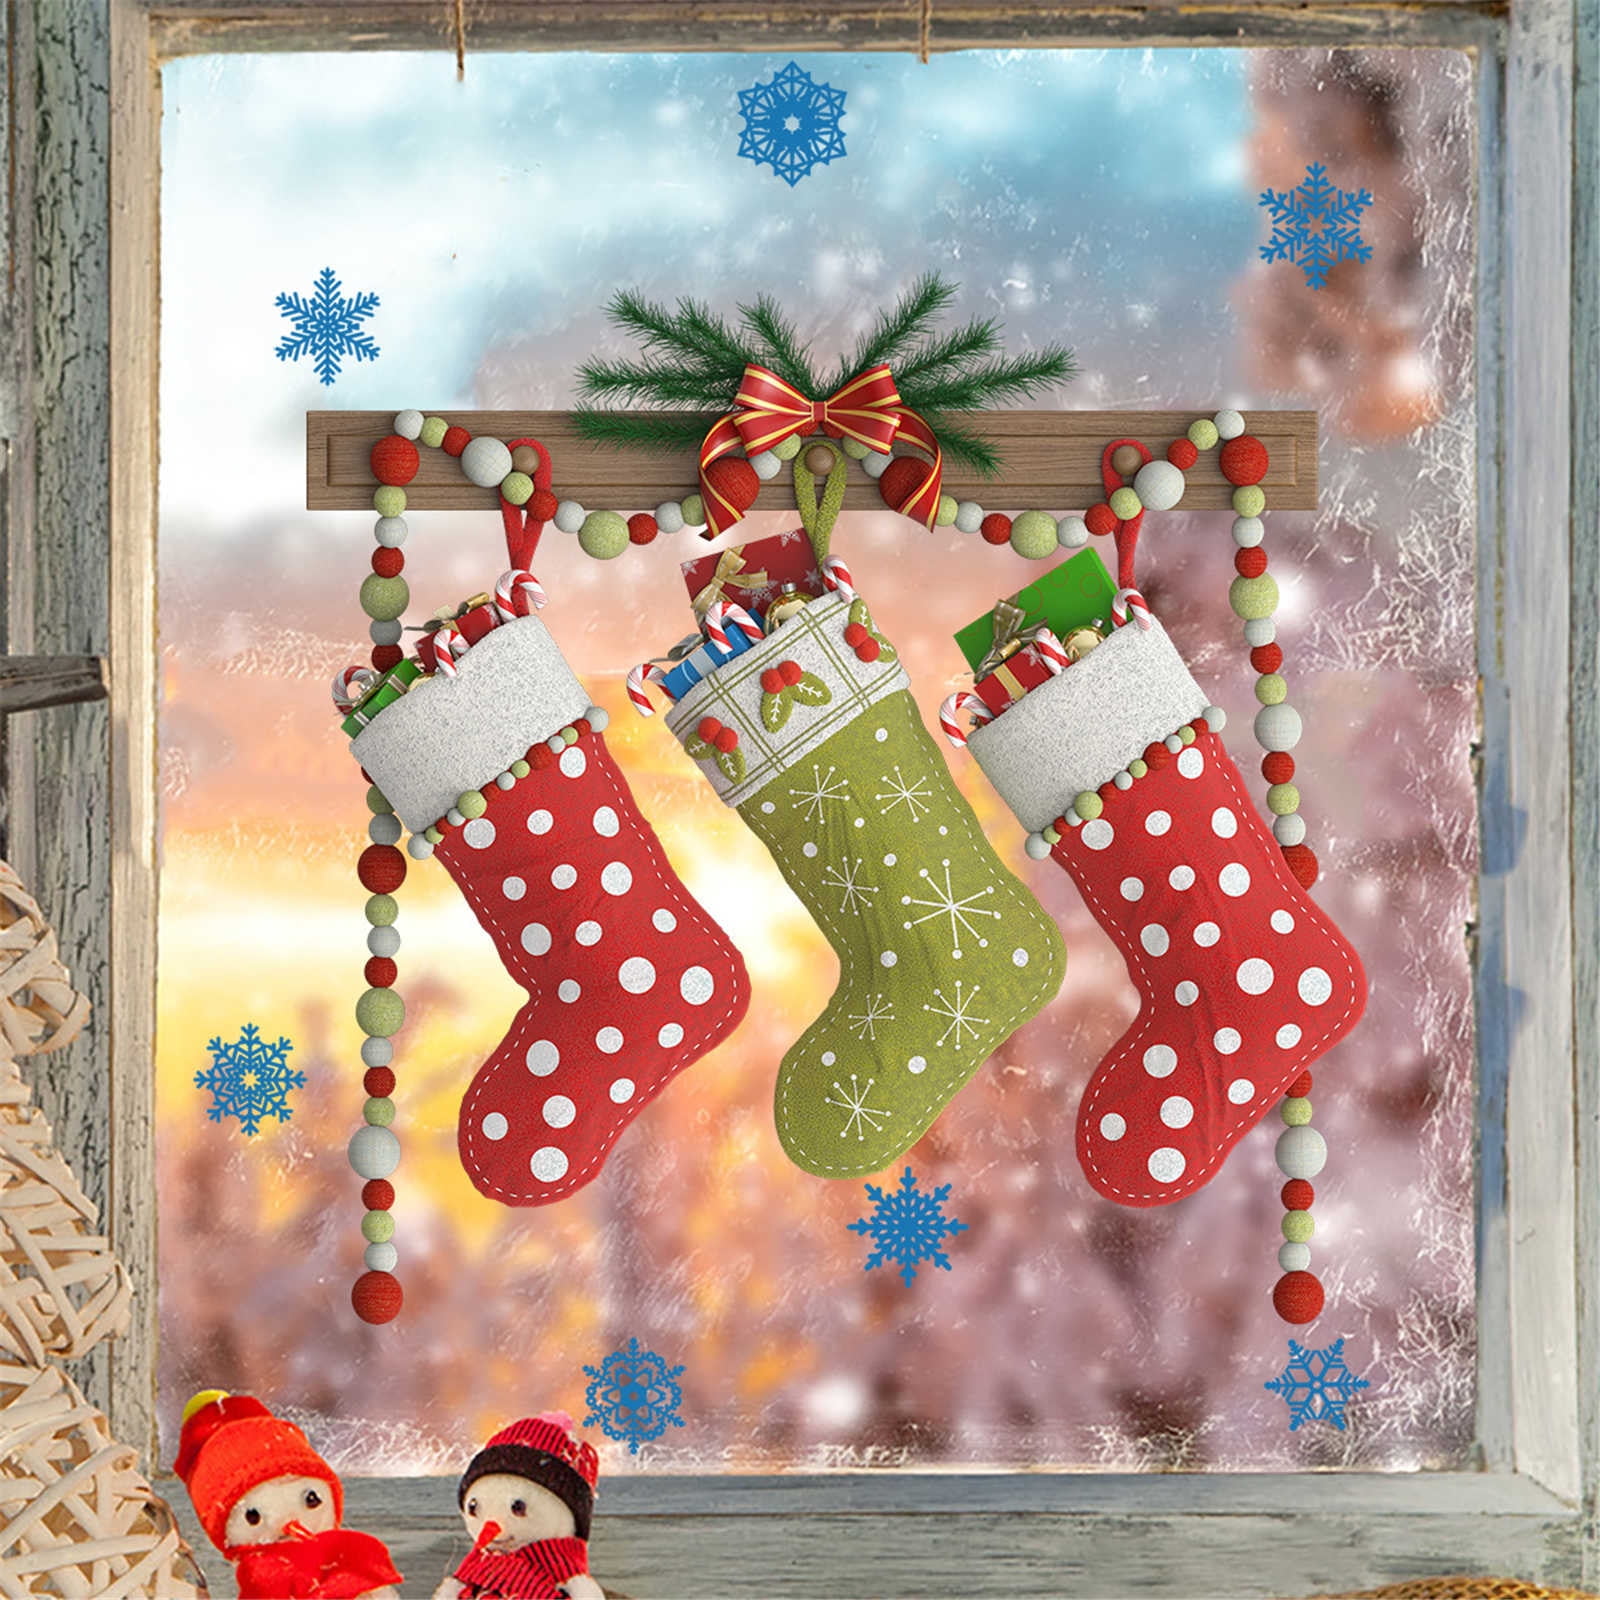 Christmas Tree Socks Gift Snow Star Wall Stickers Decal Removable Kids Decor Art 